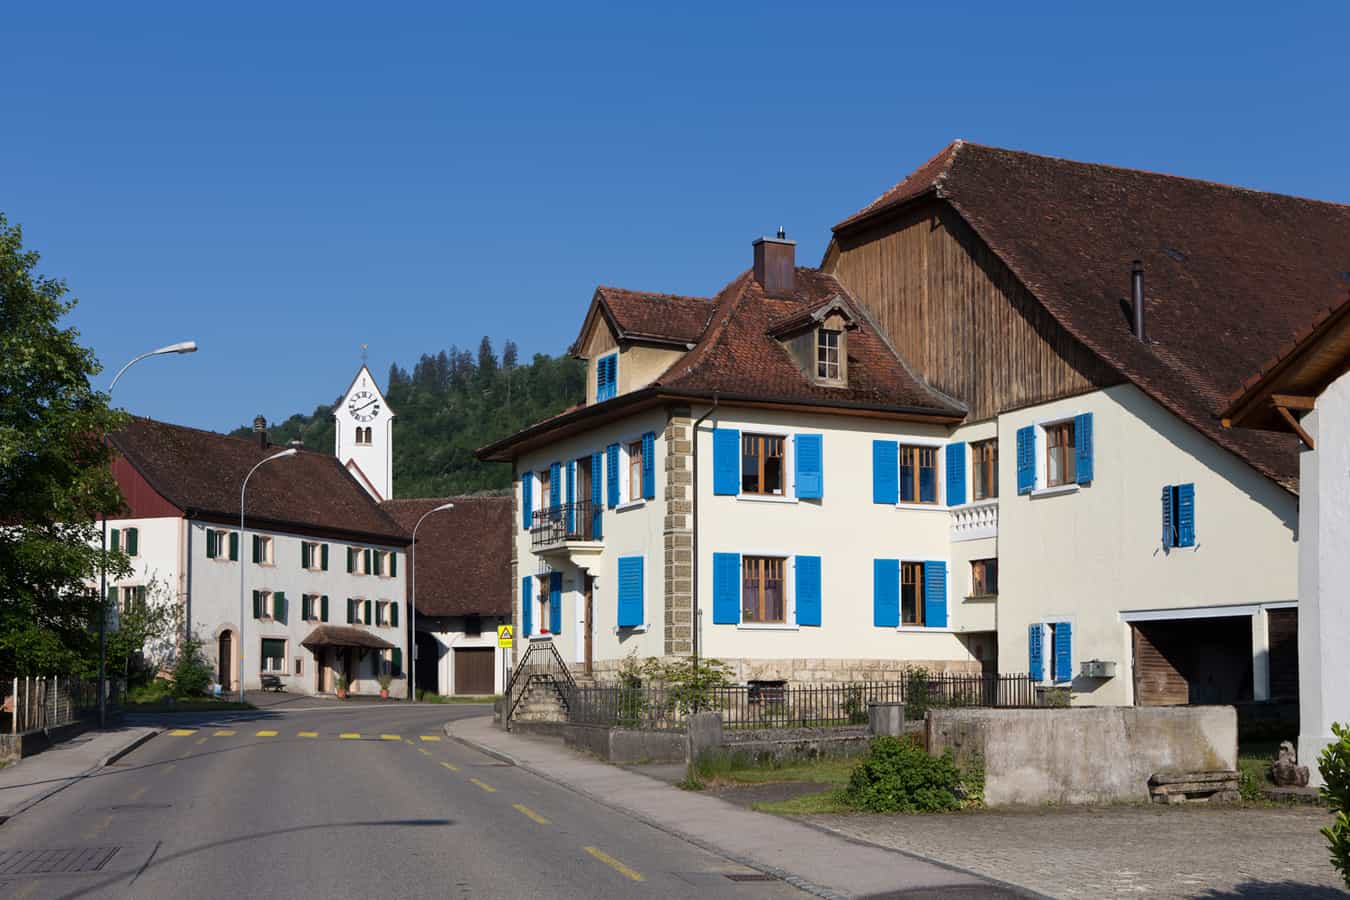 At the Village in Glovelier, commune of Haute-Sorne (JU)